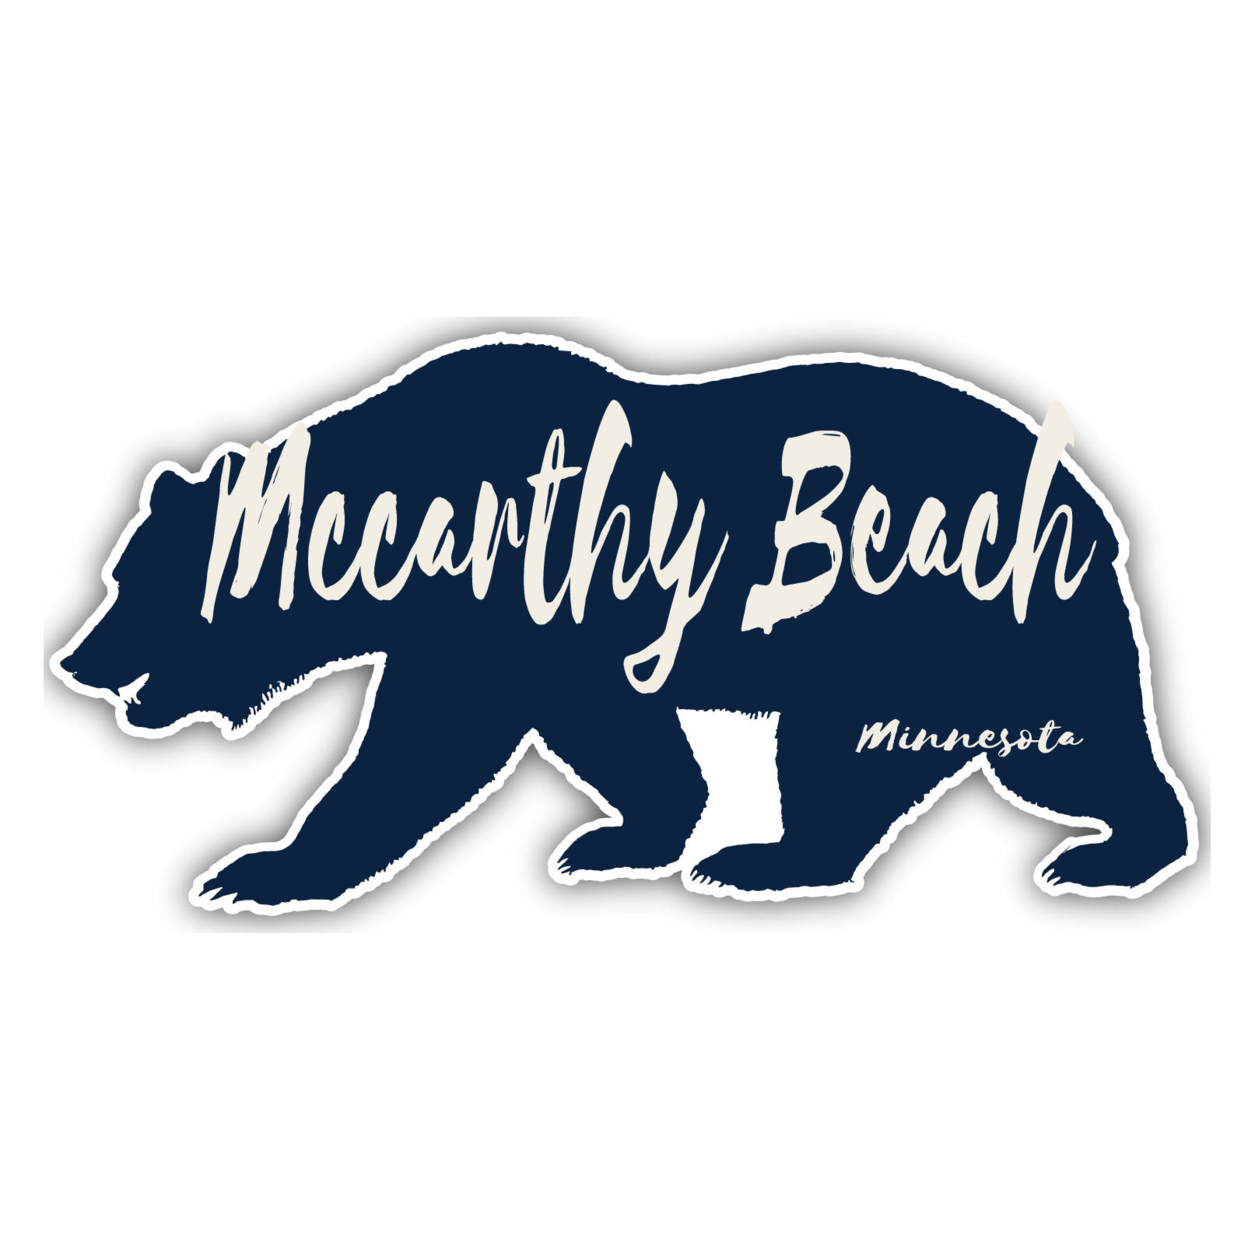 Mccarthy Beach Minnesota Souvenir Decorative Stickers (Choose Theme And Size) - 4-Inch, Bear